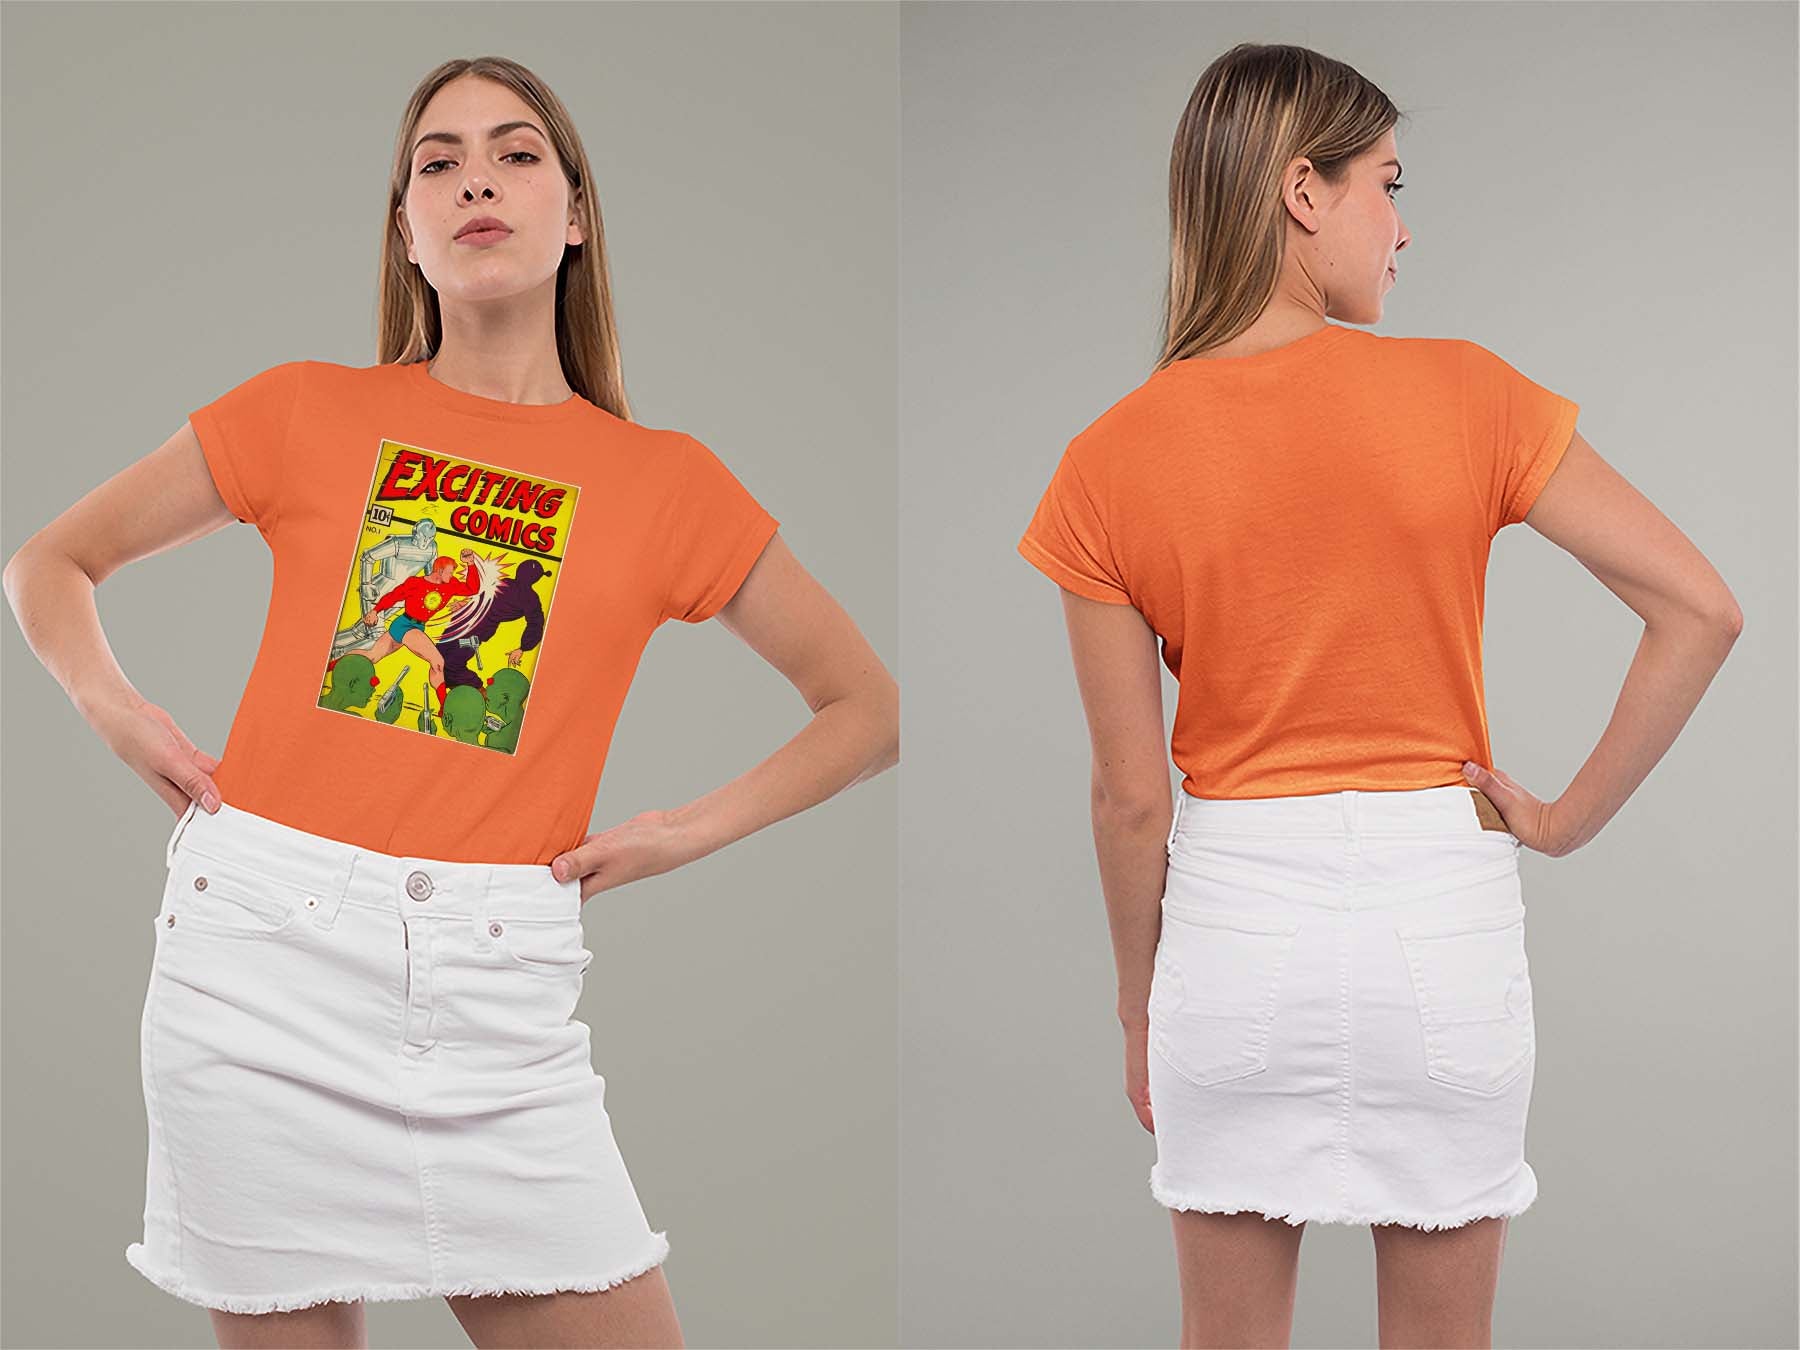 Exciting Comics No.1 Ladies Crew (Round) Neck Shirt Small Orange